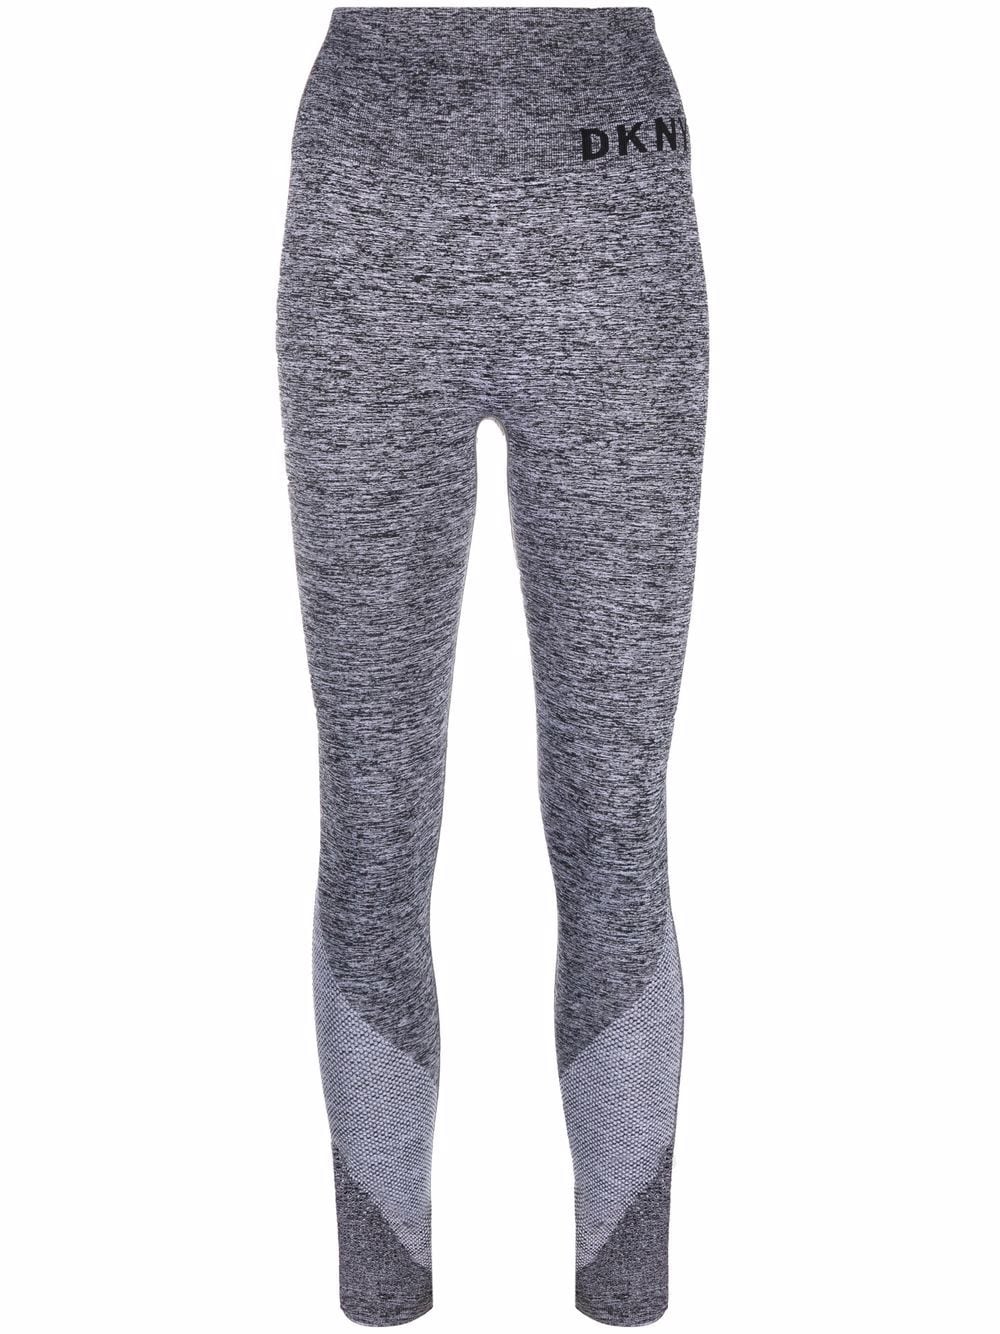 Pantalons Pour Femme - Dkny - En Synthetic Fibers Grey - Taille:  -